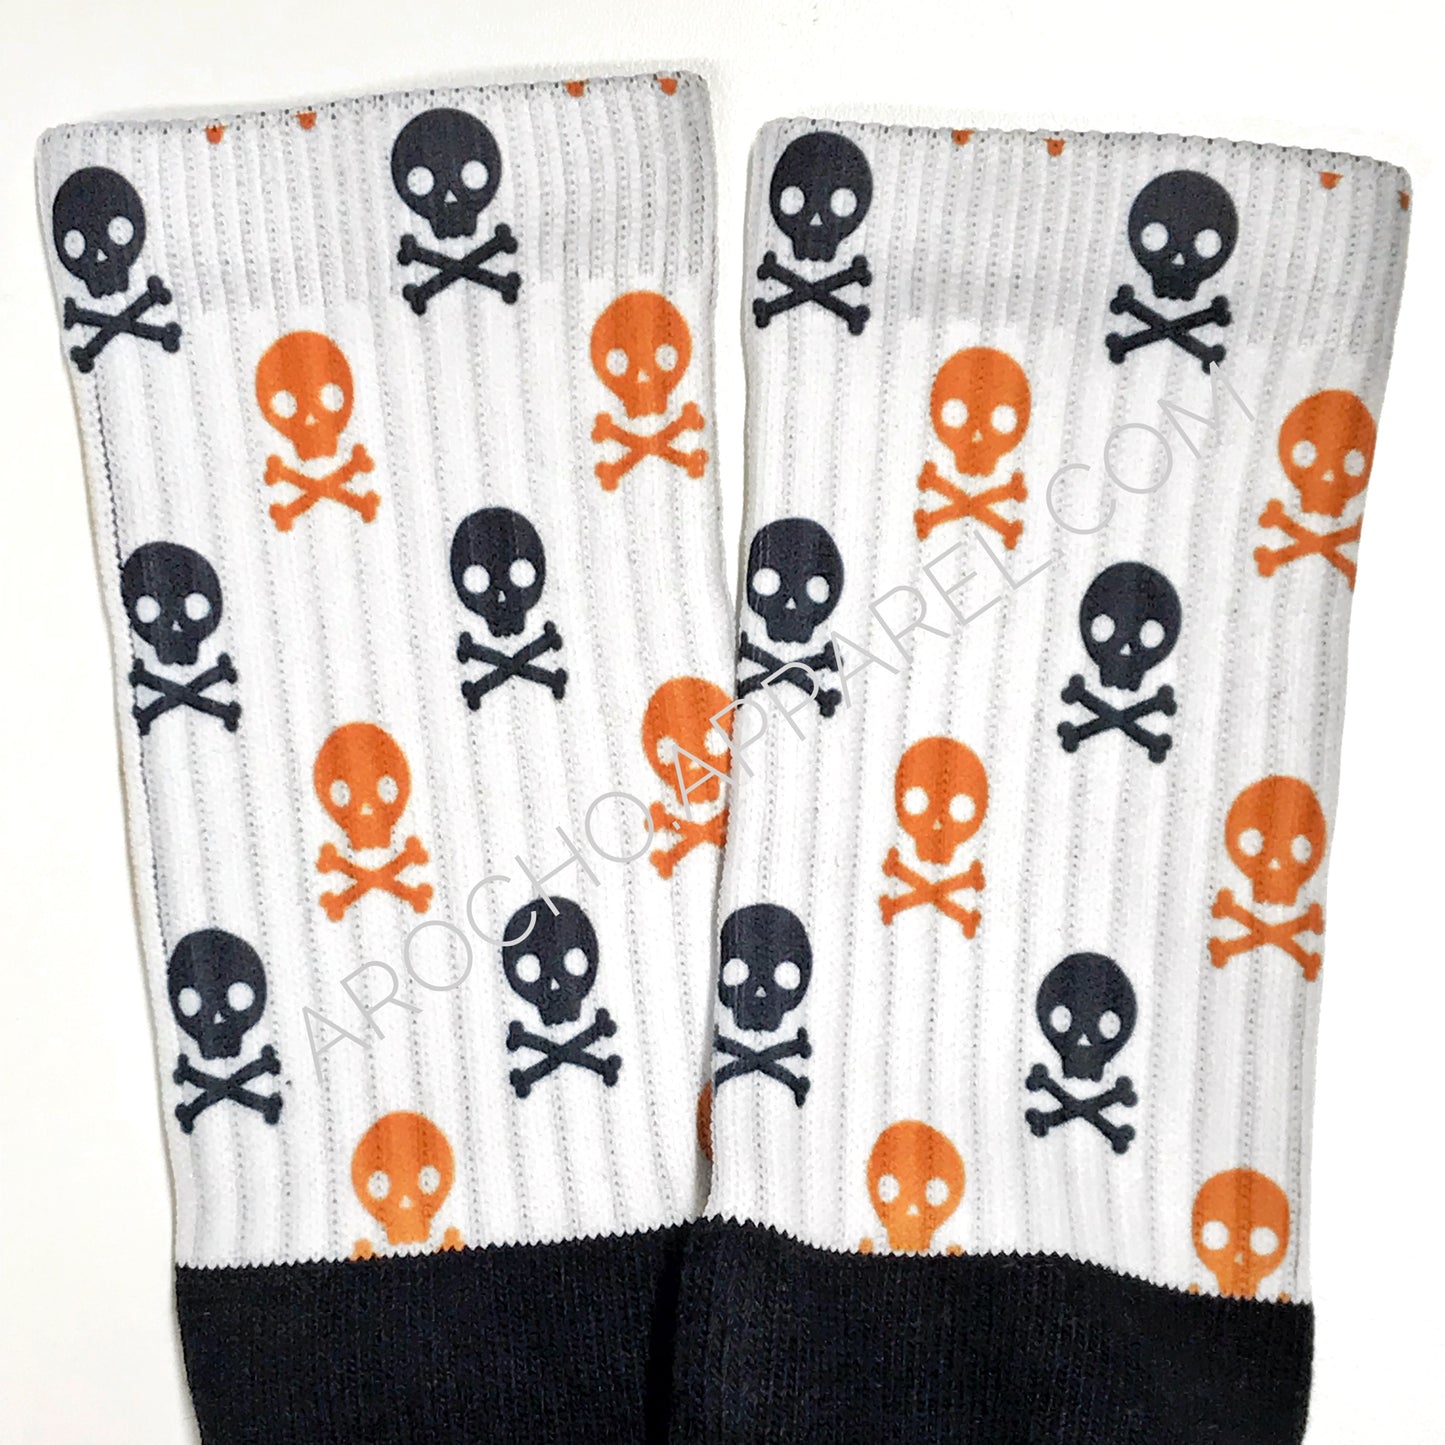 Cute Halloween socks